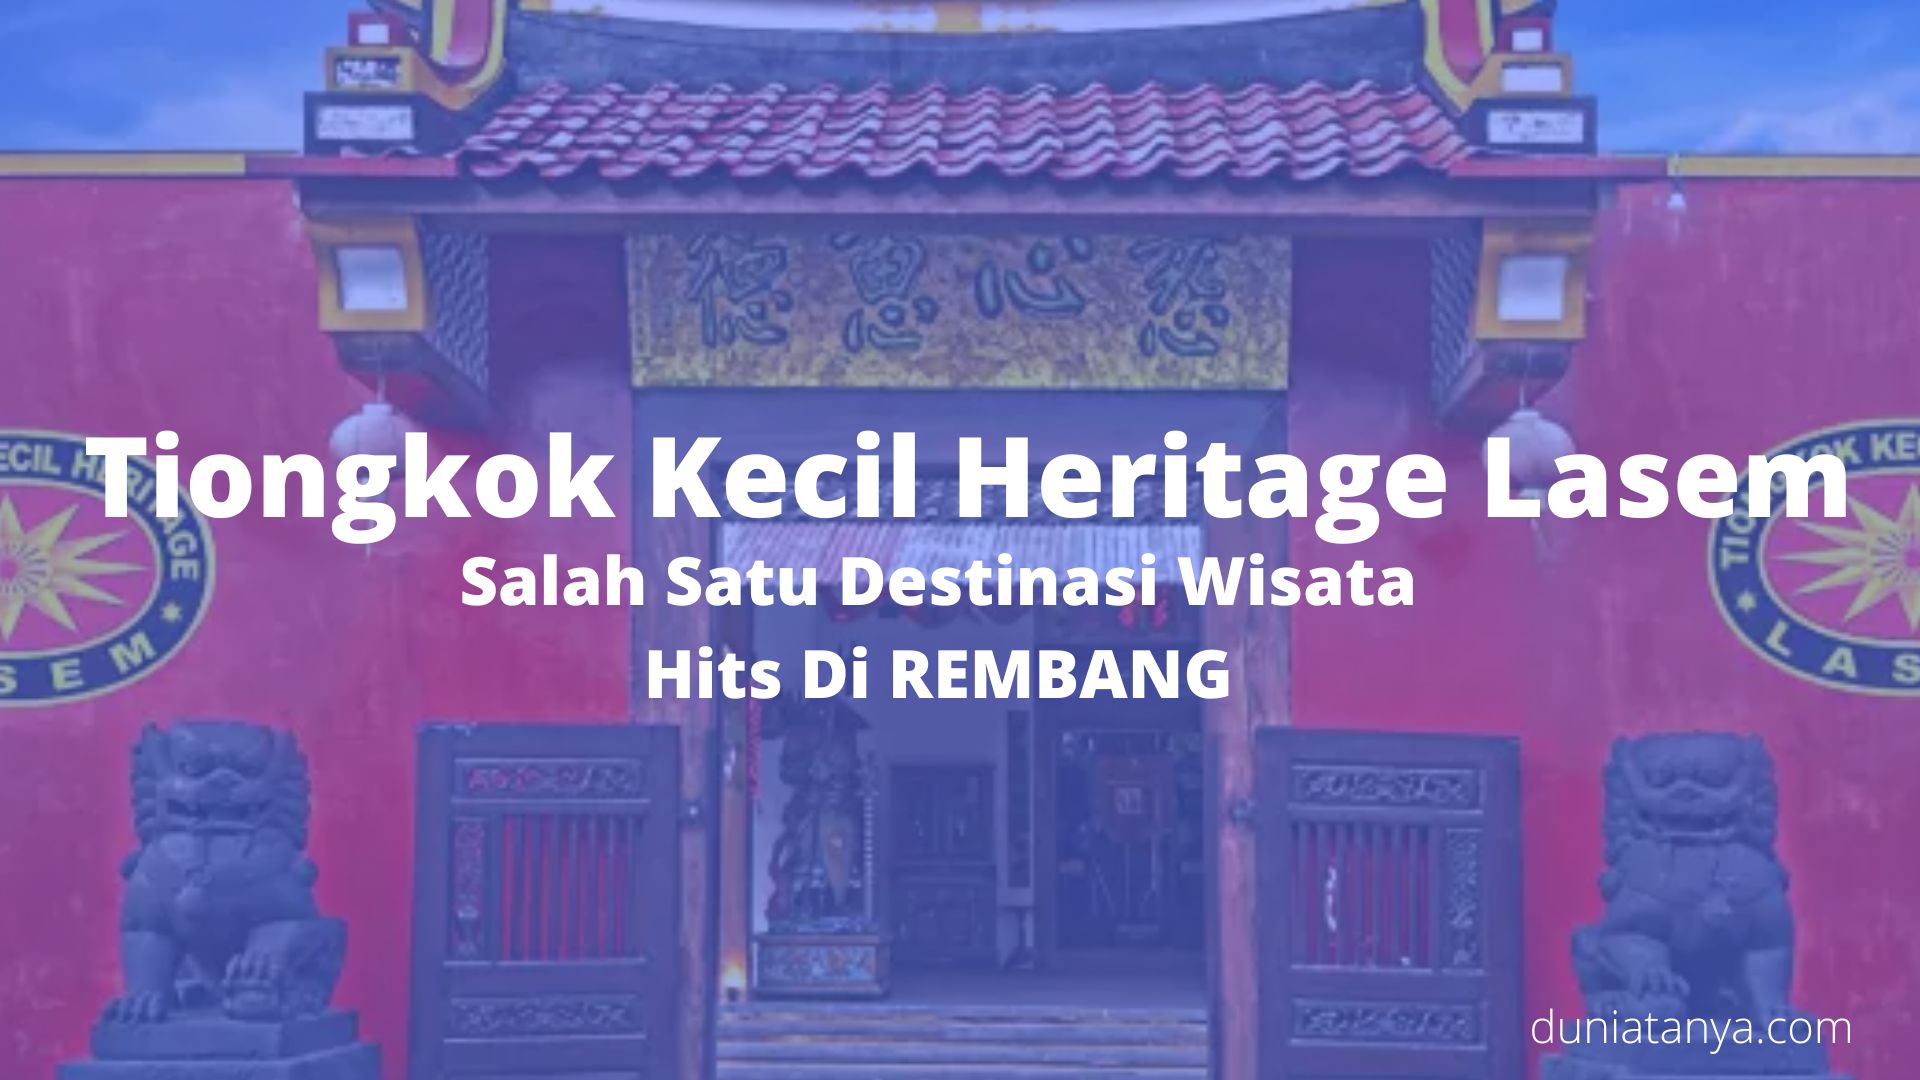 You are currently viewing Tiongkok Kecil Heritage Lasem : Salah Satu Destinasi Wisata Hits Di REMBANG